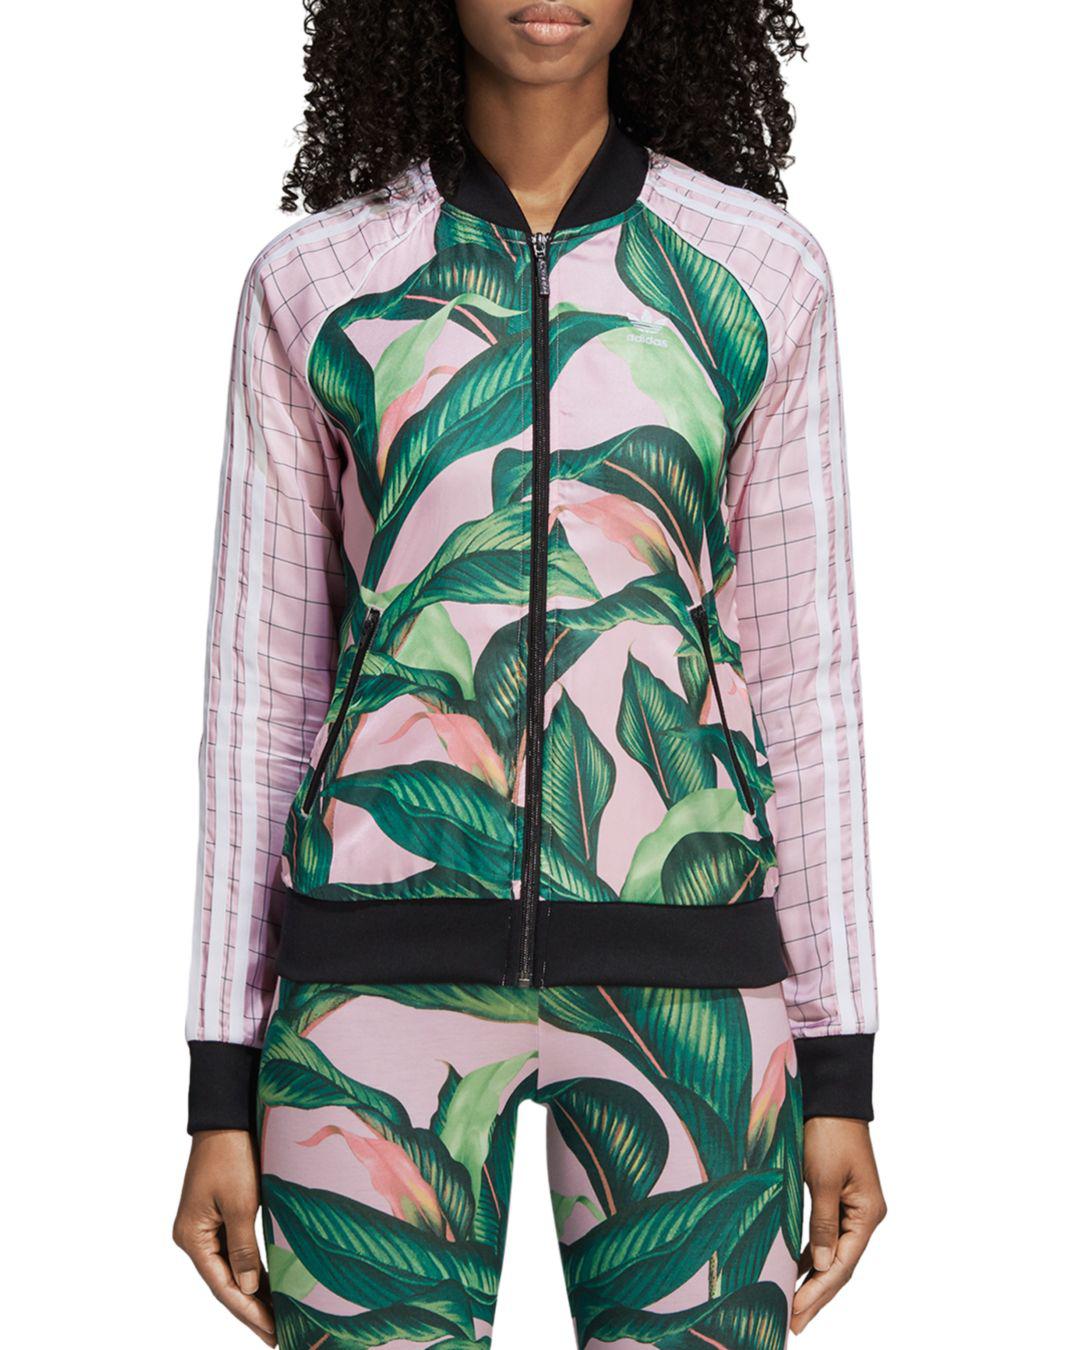 adidas palm tree jacket